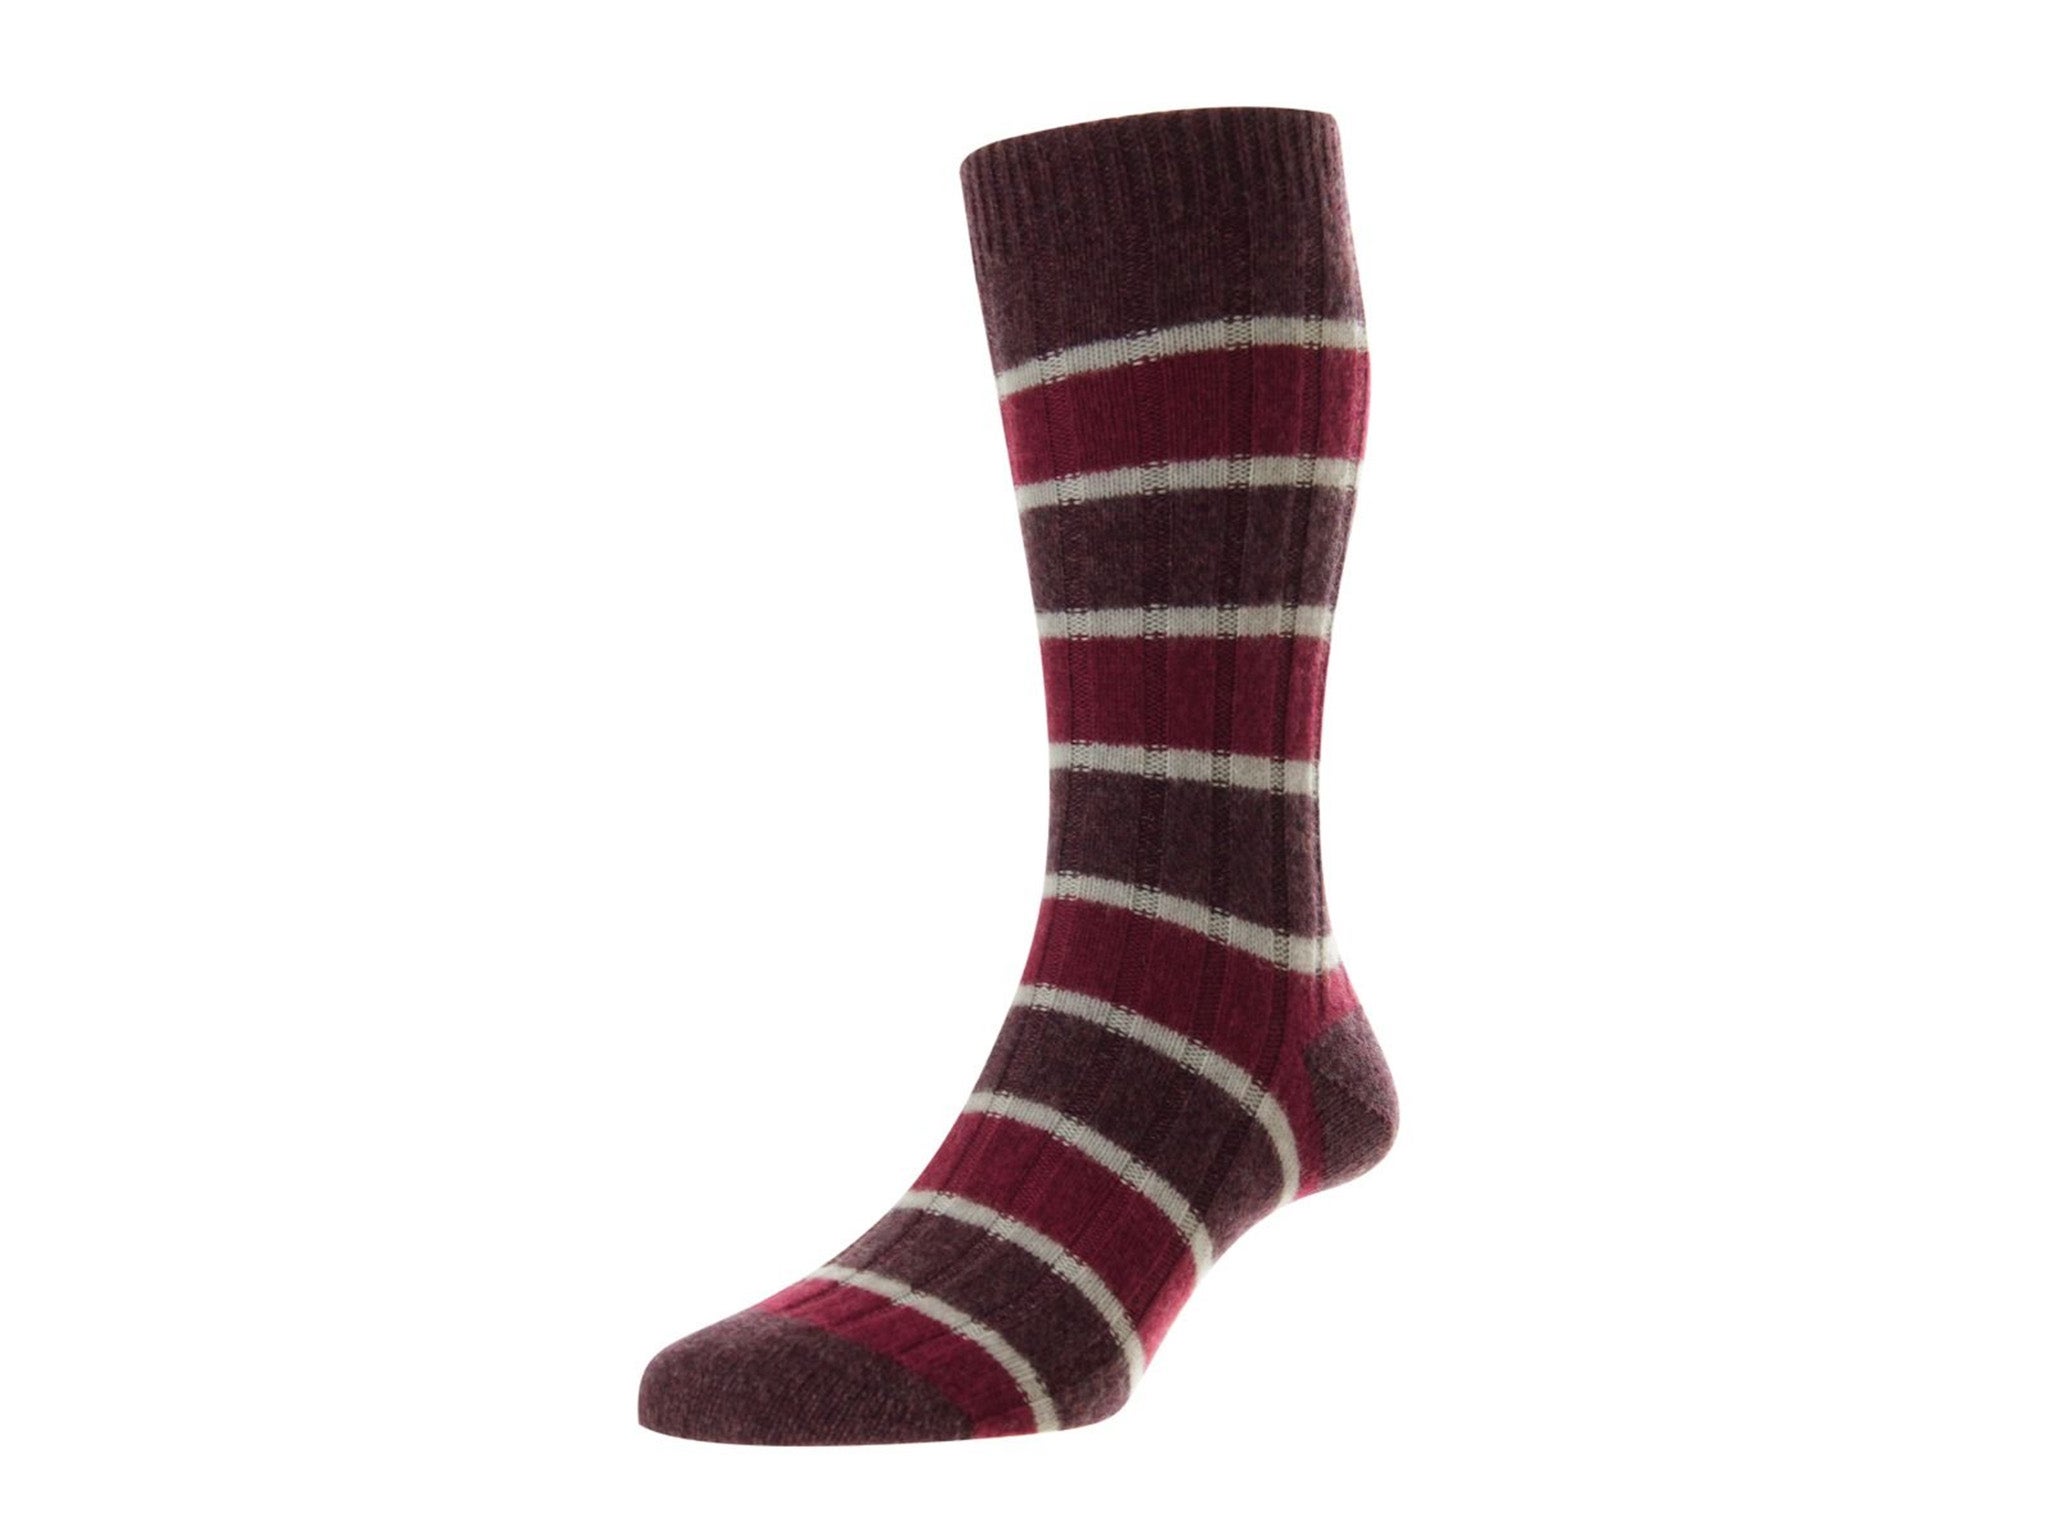 Pantherella stalbridge cashmere socks